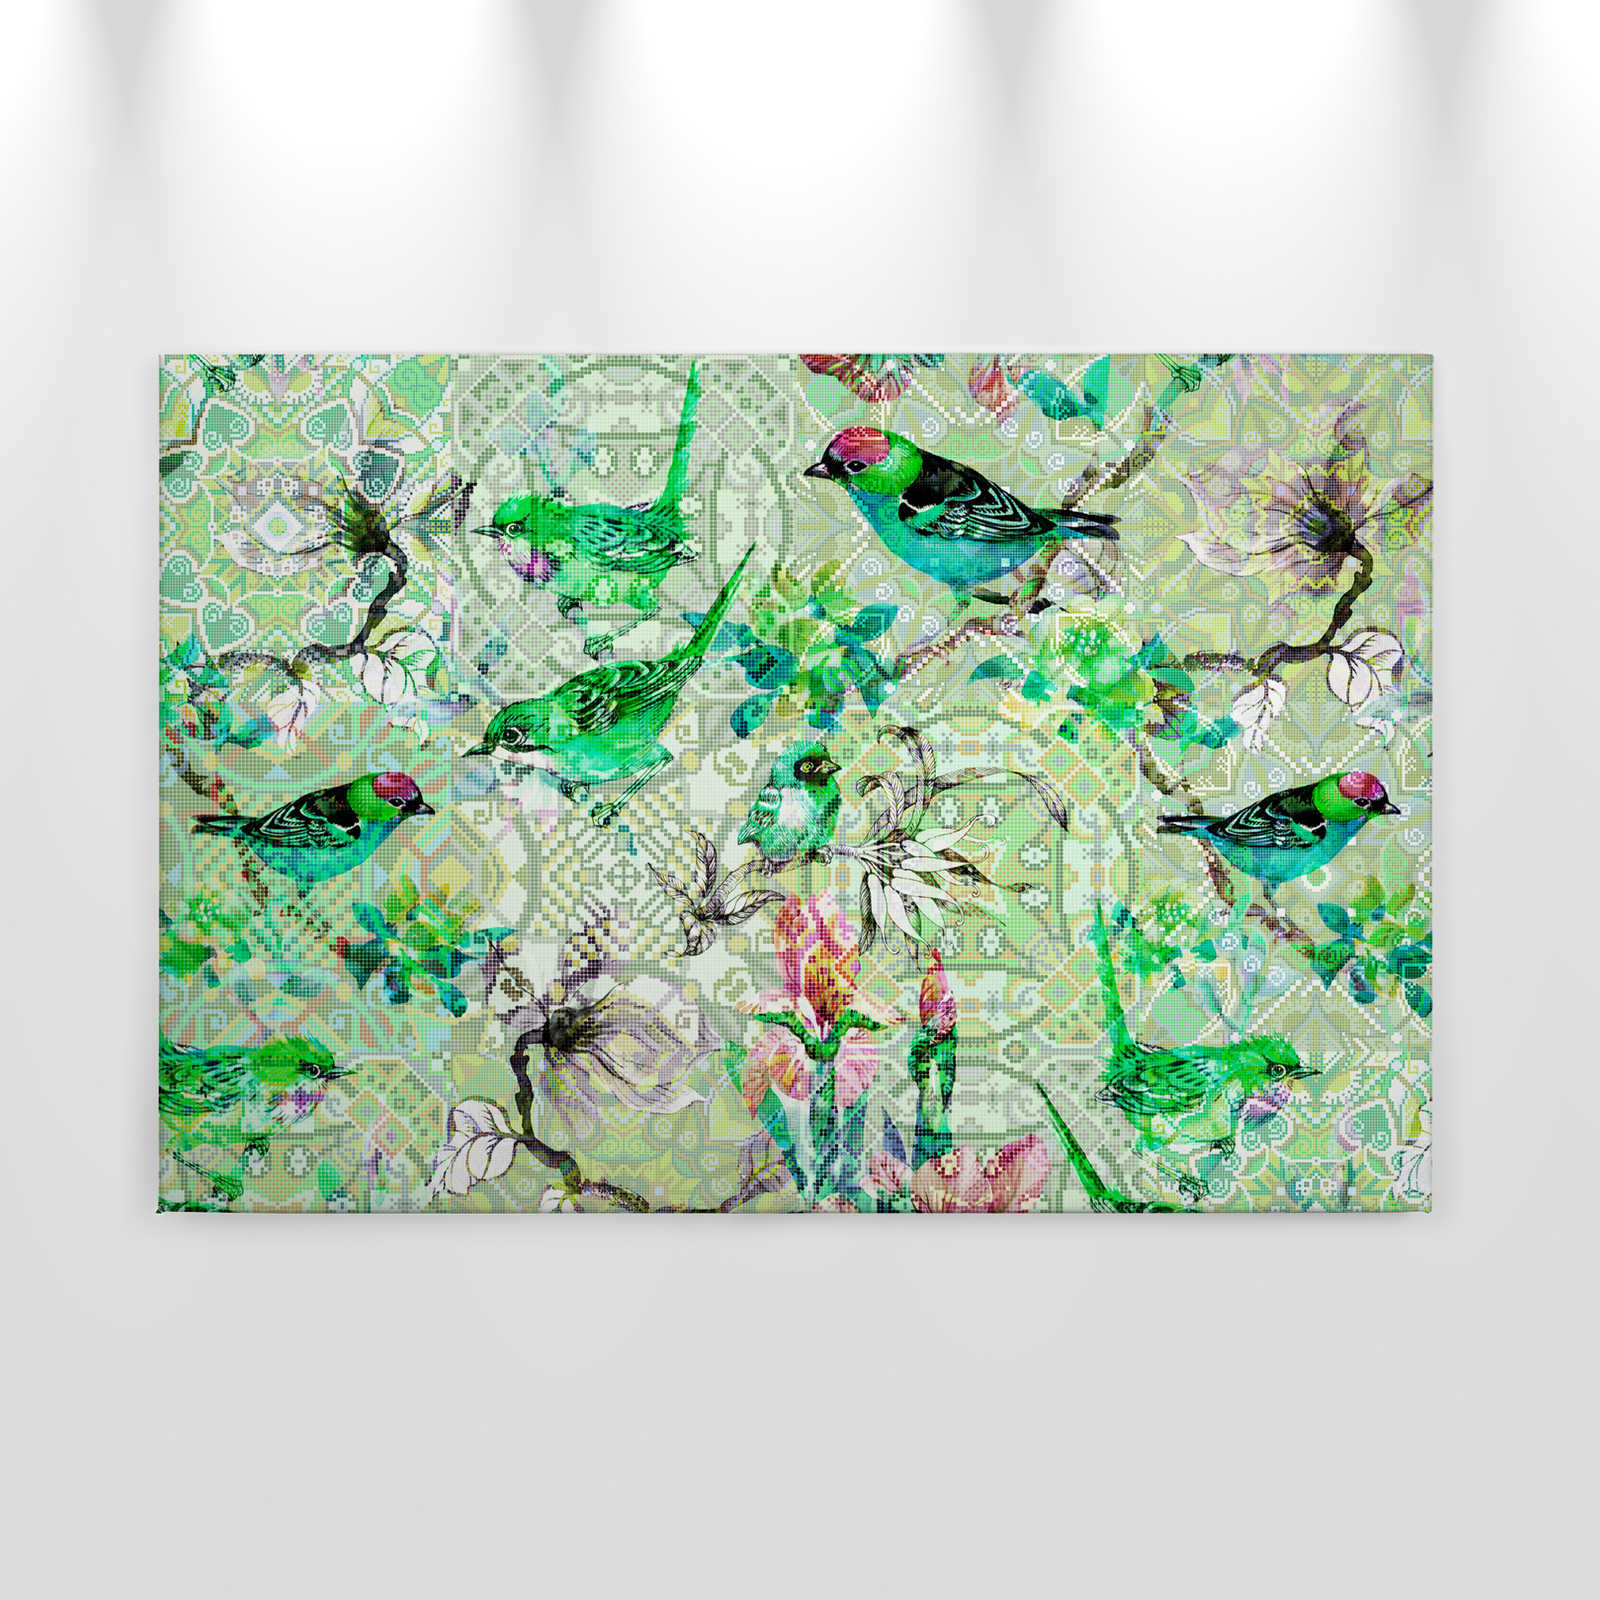             Pintura en lienzo Pájaro verde con motivo de mosaico - 0,90 m x 0,60 m
        